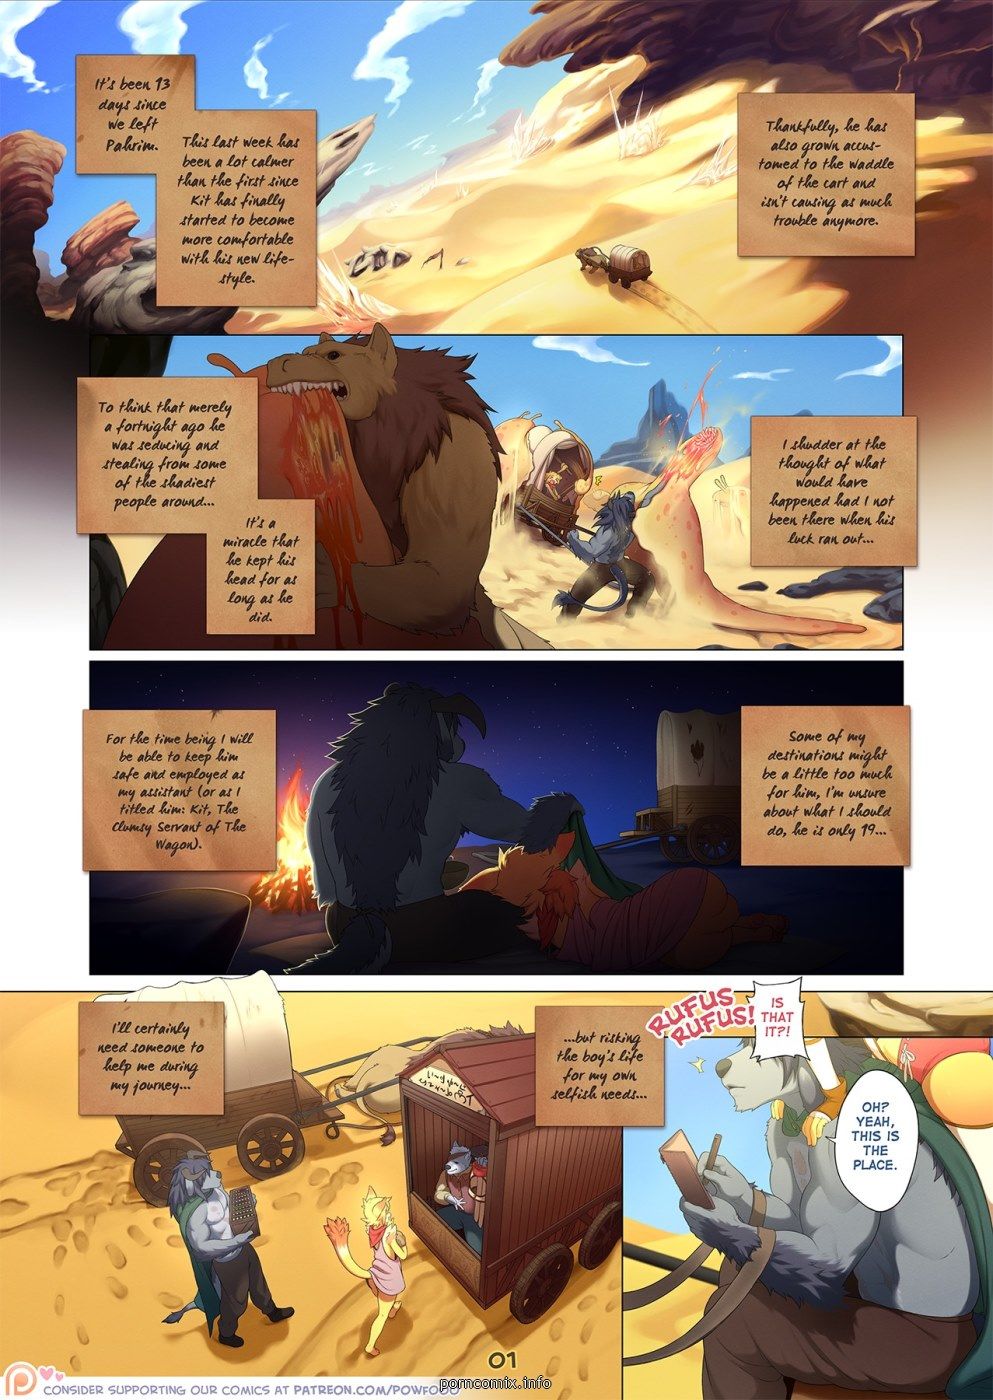 [Powfooo] Arcana Tales Chapter 2 page 1